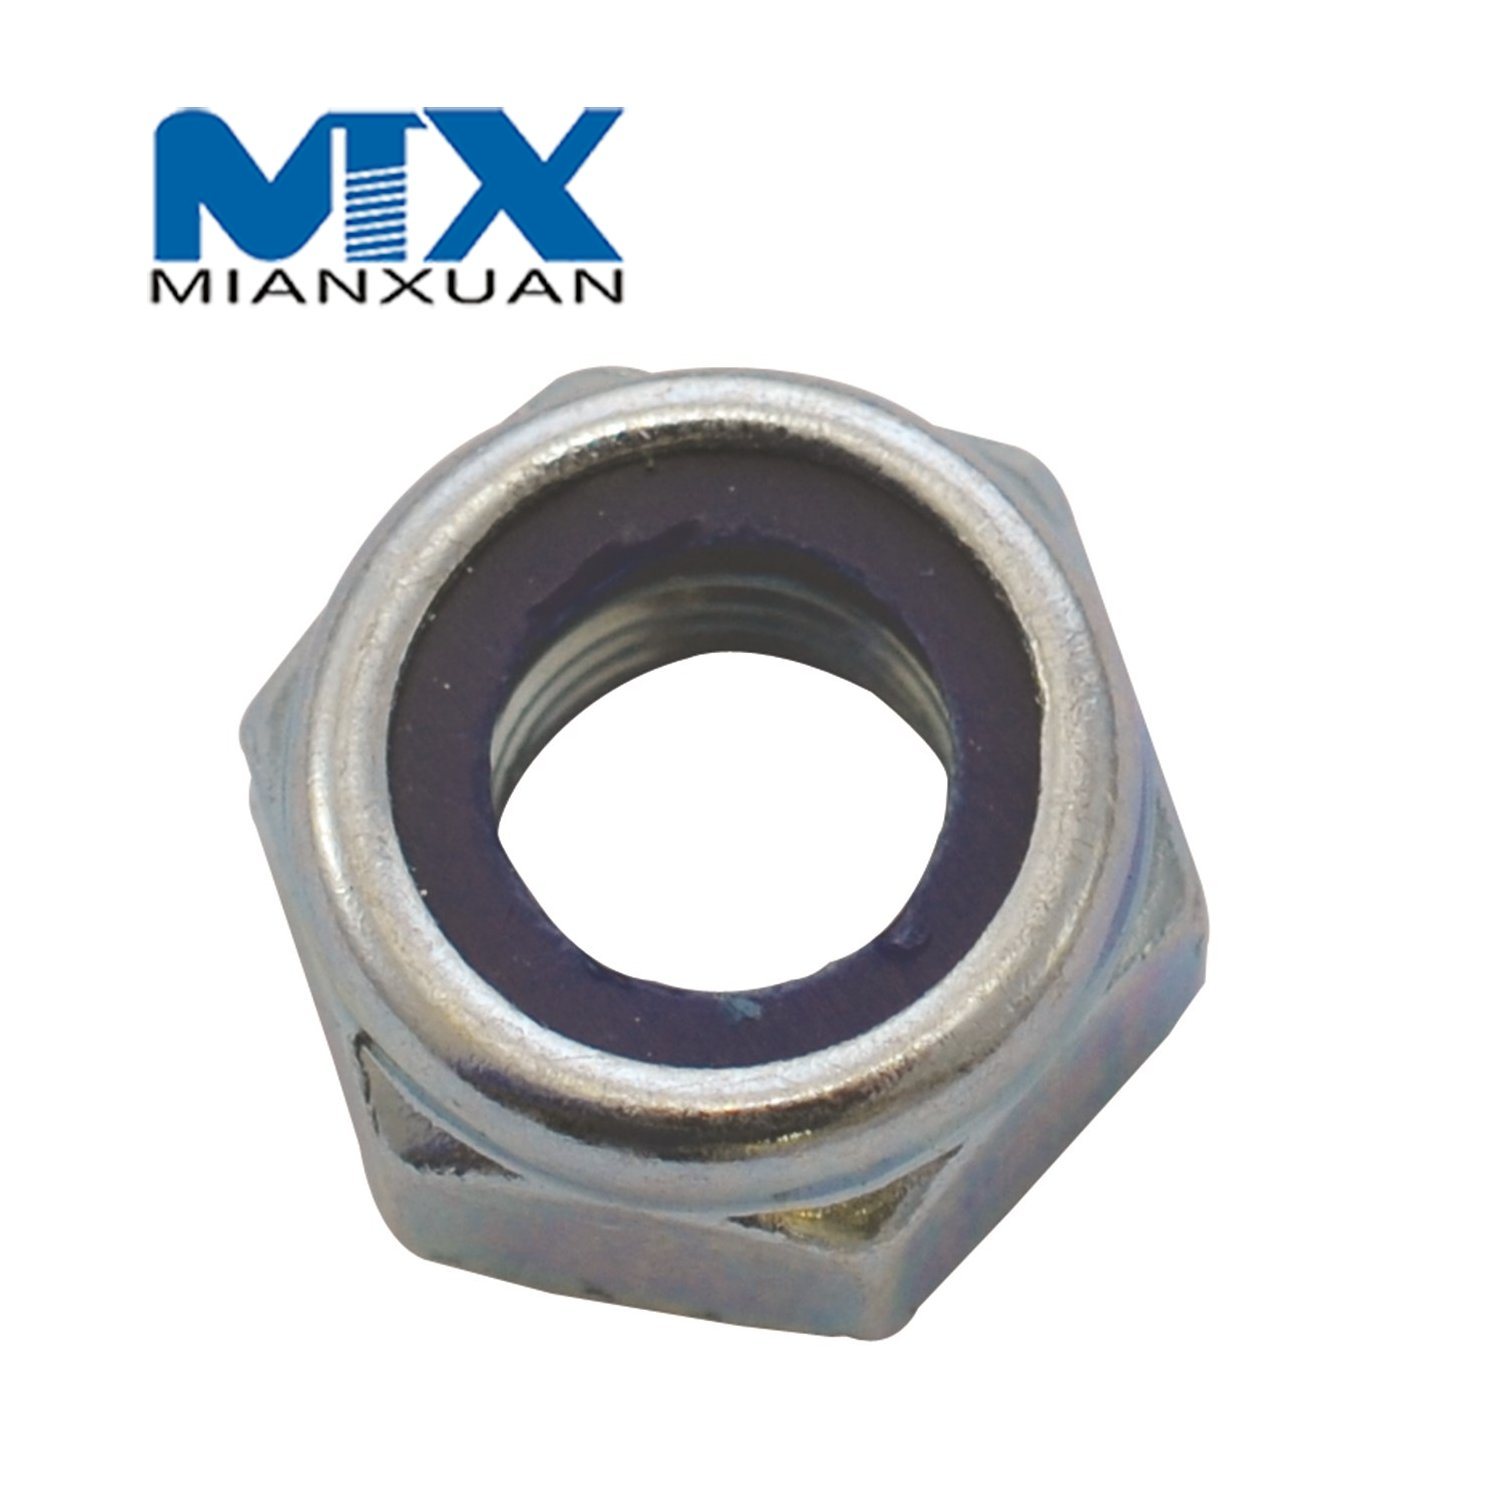 DIN985 Hex Nylon Insert Nut Self Lock Nut DIN 985 Carbon Steel 4.8 8.8 10.9 12.9 M24 M30 M36 M42 M48 HDG Hot DIP Galvanized